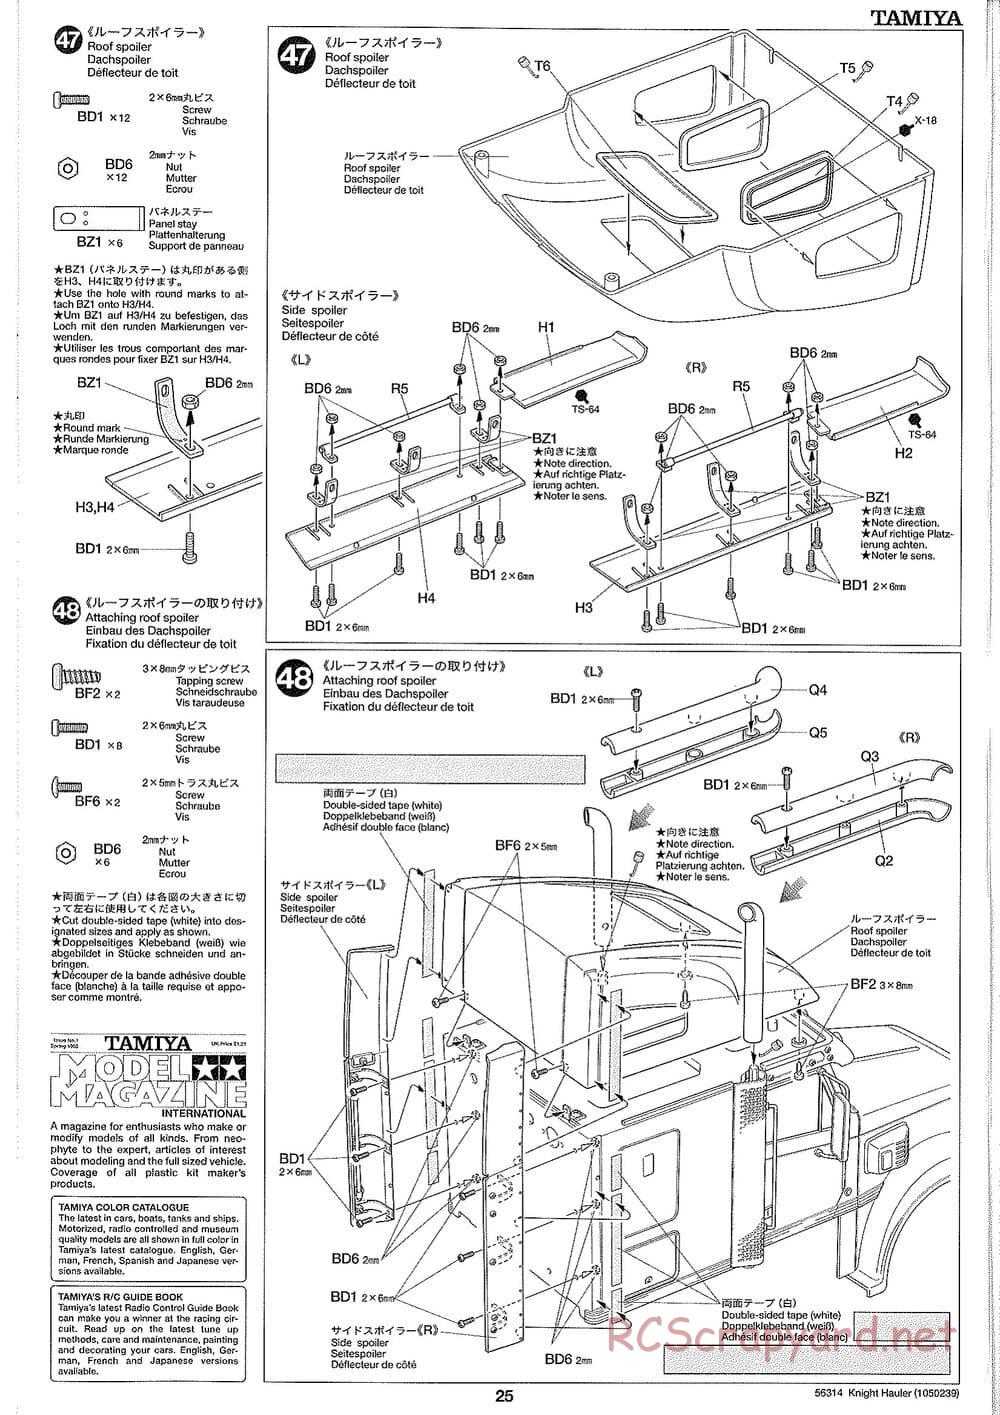 Tamiya - Knight Hauler Tractor Truck Chassis - Manual - Page 25